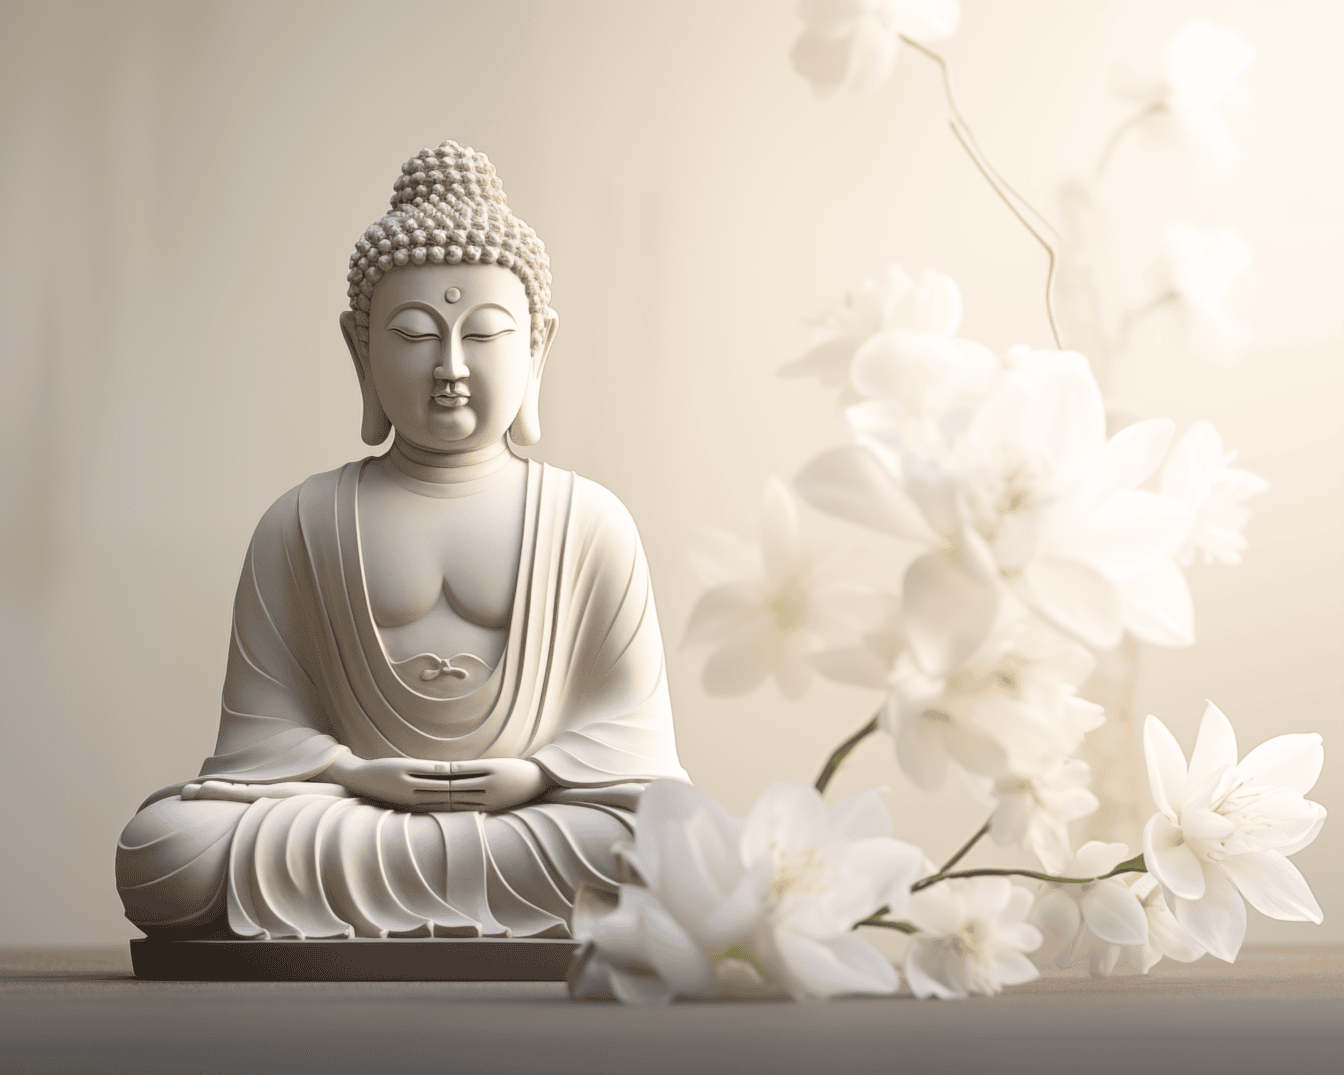 Statua di un Buddha in profonda meditazione trascendentale mentre è seduto in una posizione di loto